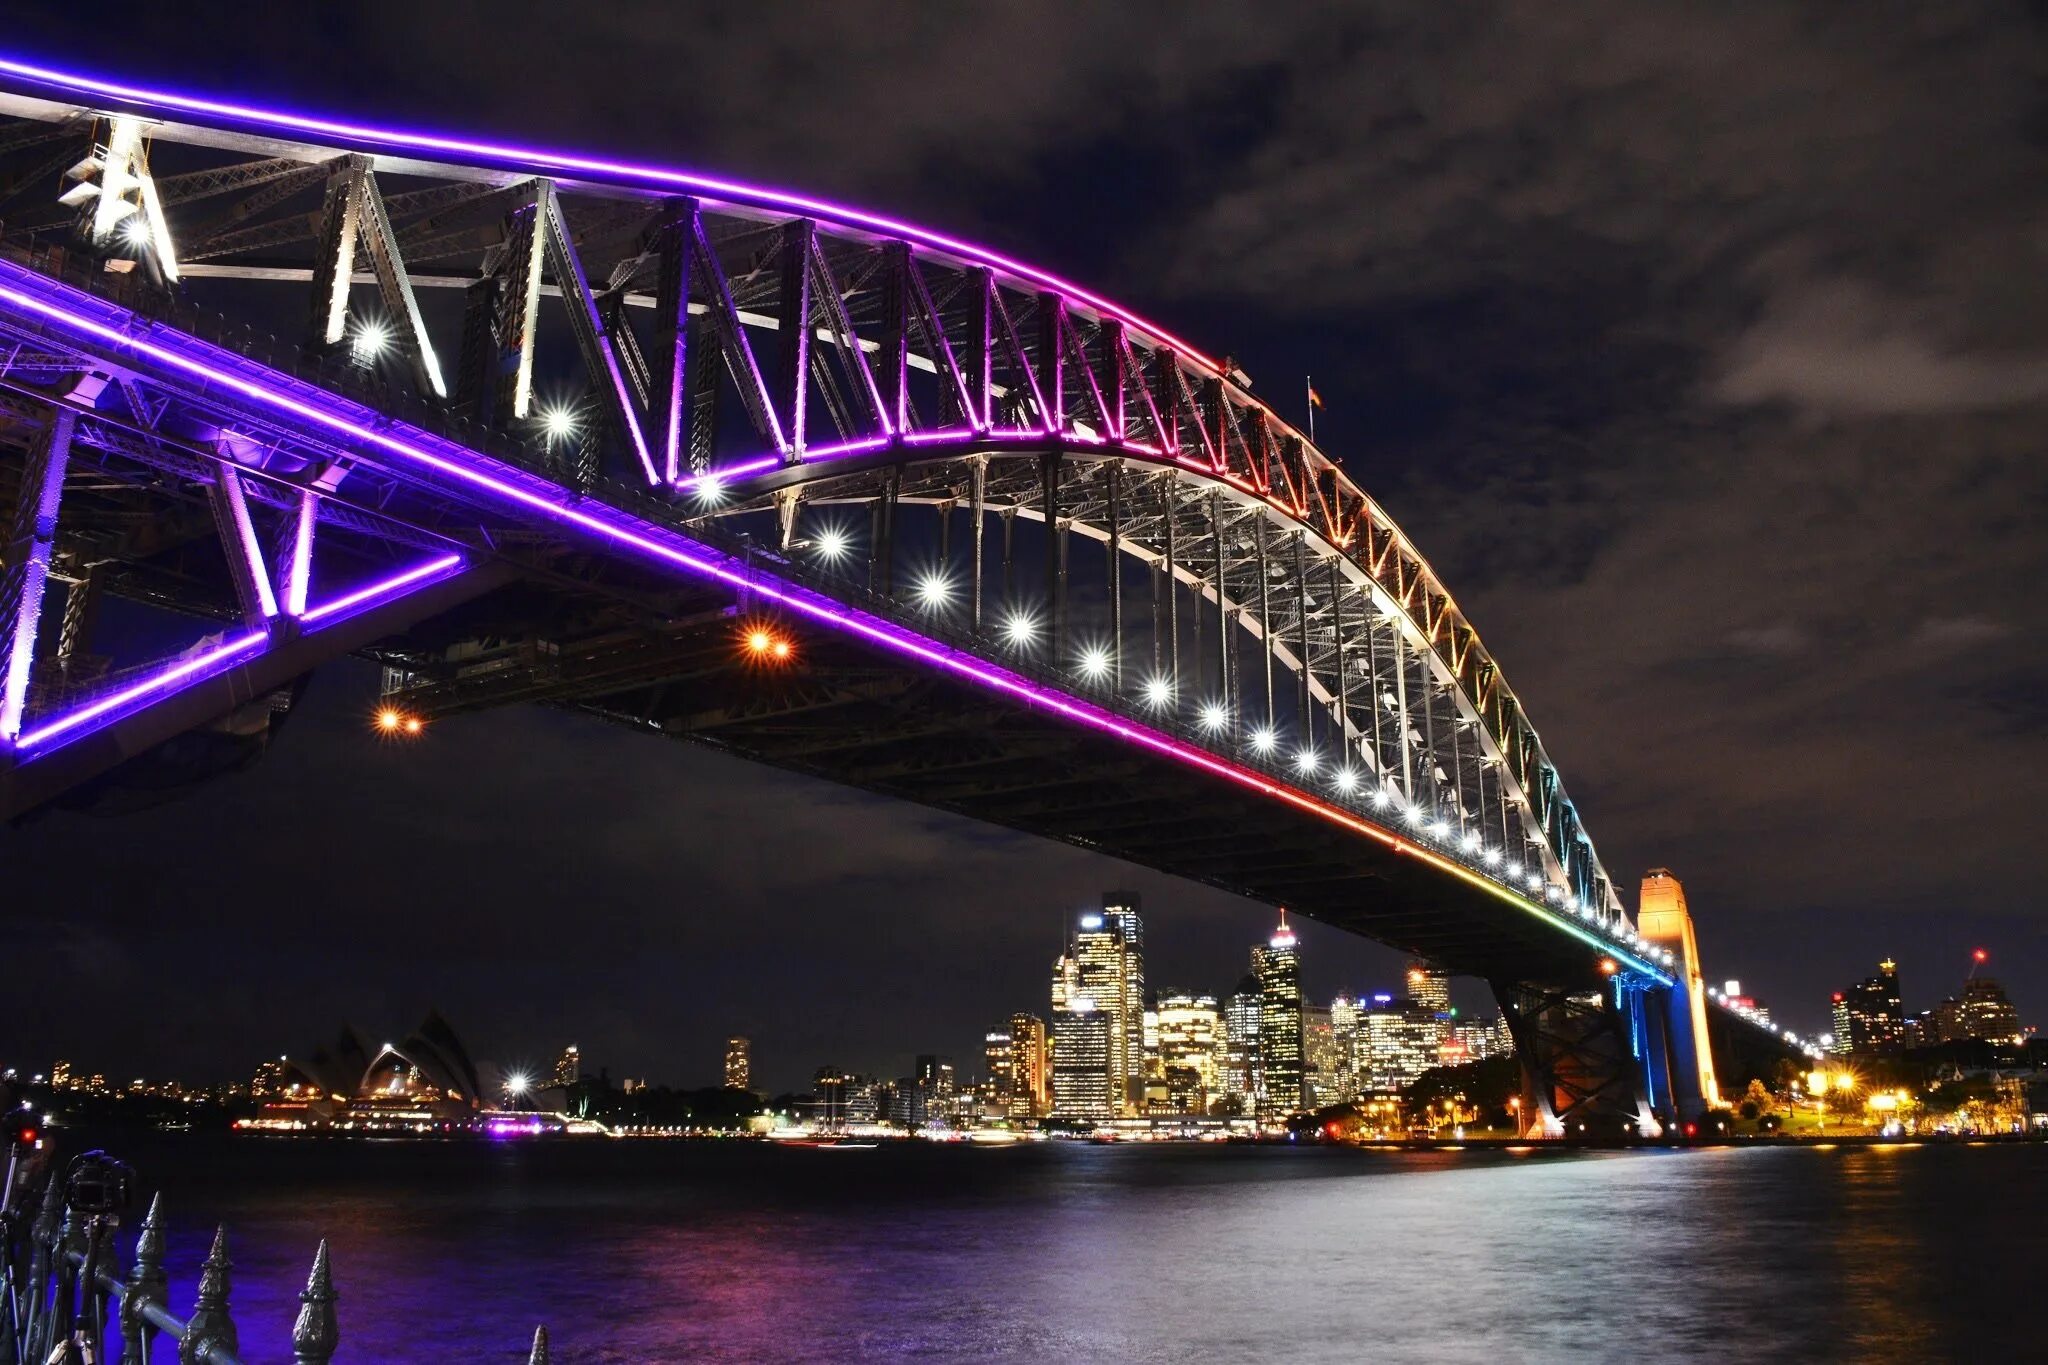 Harbour bridge. Харбор-бридж Сидней. Сиднейский мост Харбор-бридж. Австралия.Сидней.мост Харбор-бридж. Harbour Bridge Австралия.